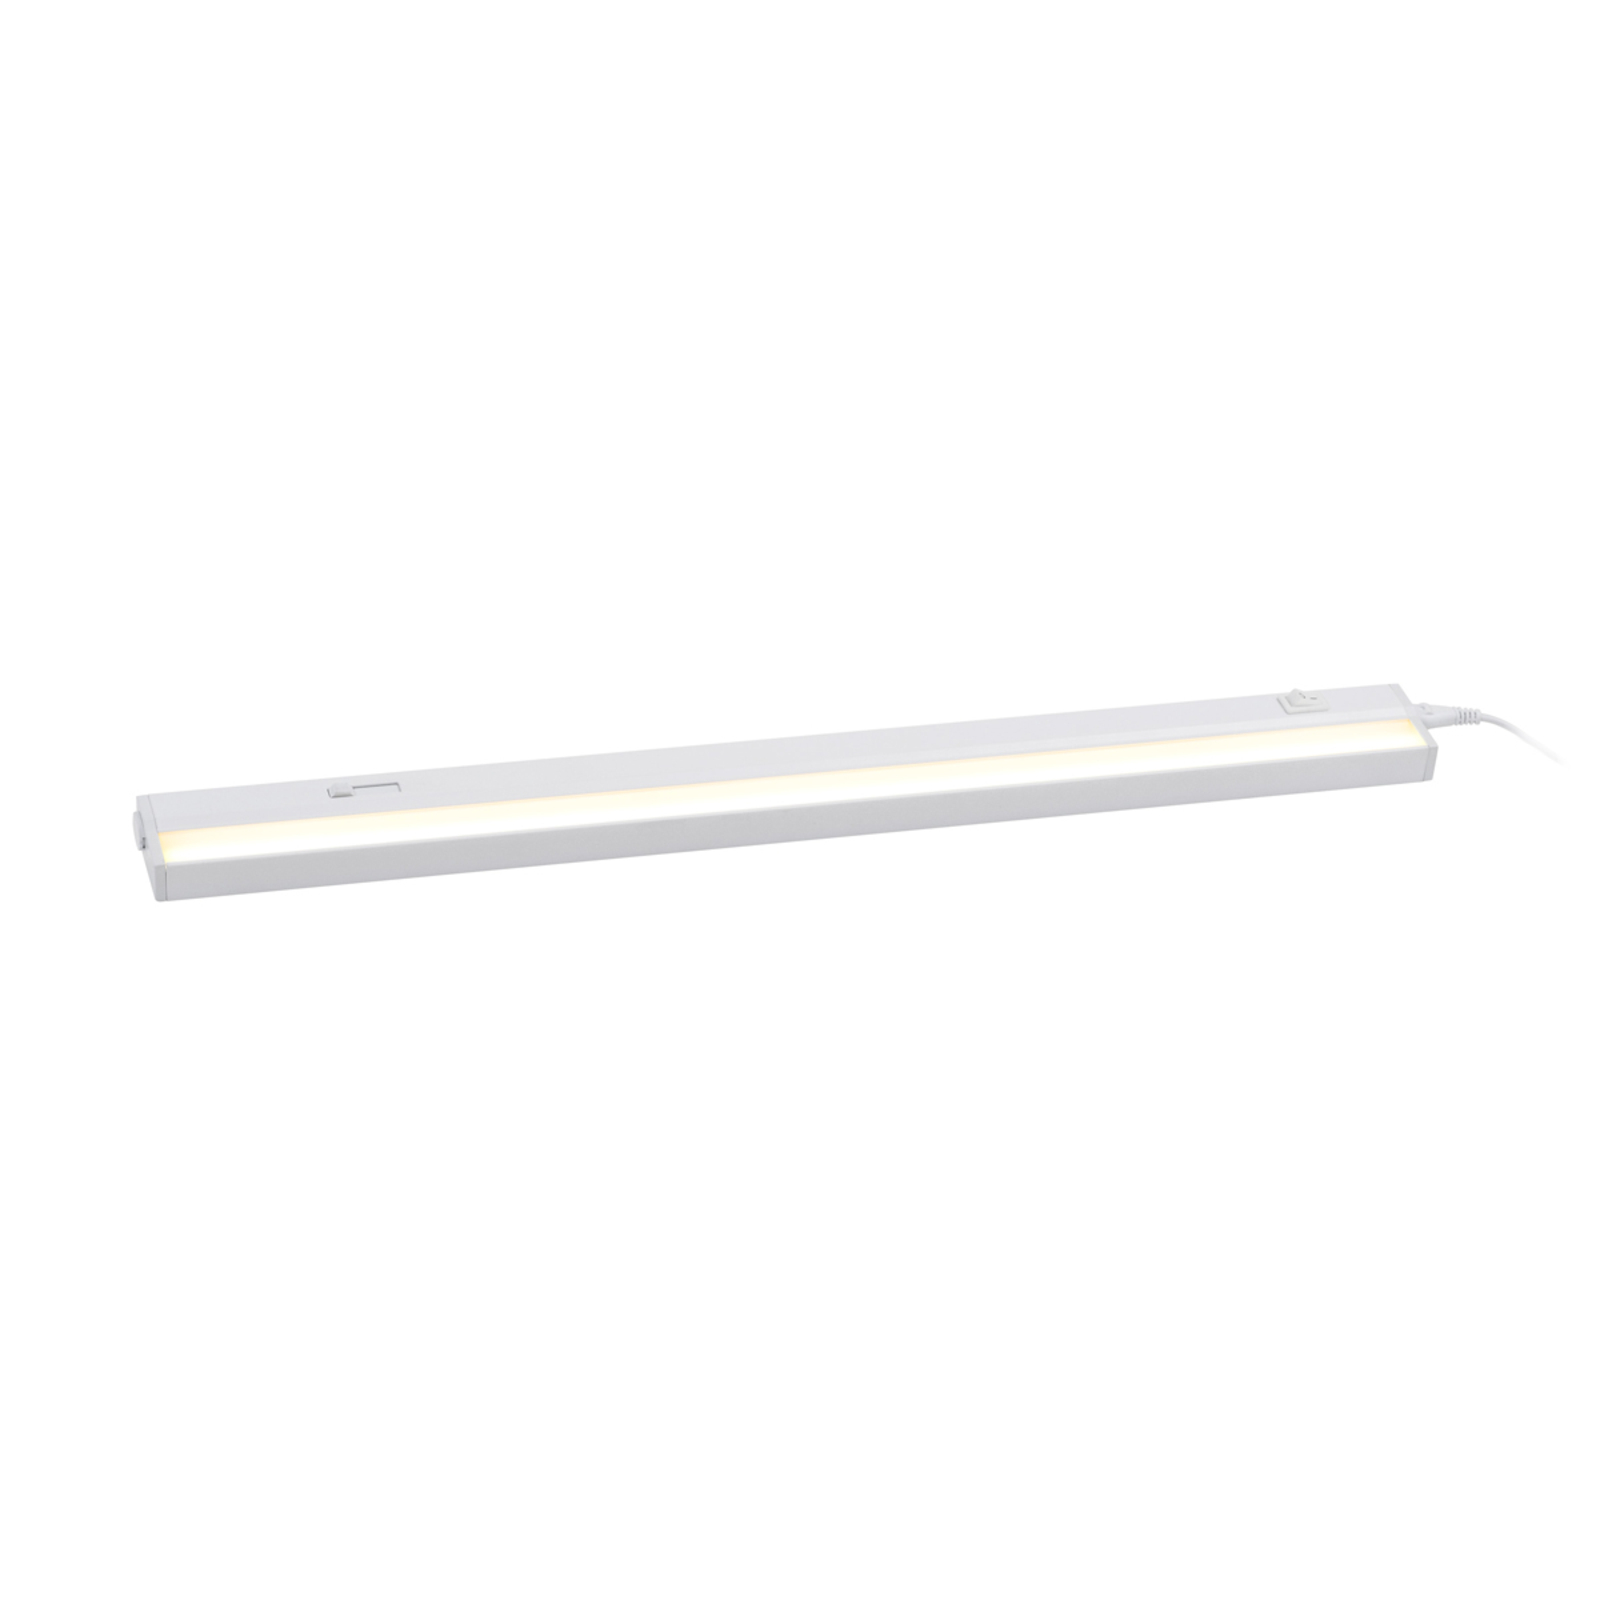 LED-Unterschranklampe Cabinet light  Länge 42,4 cm